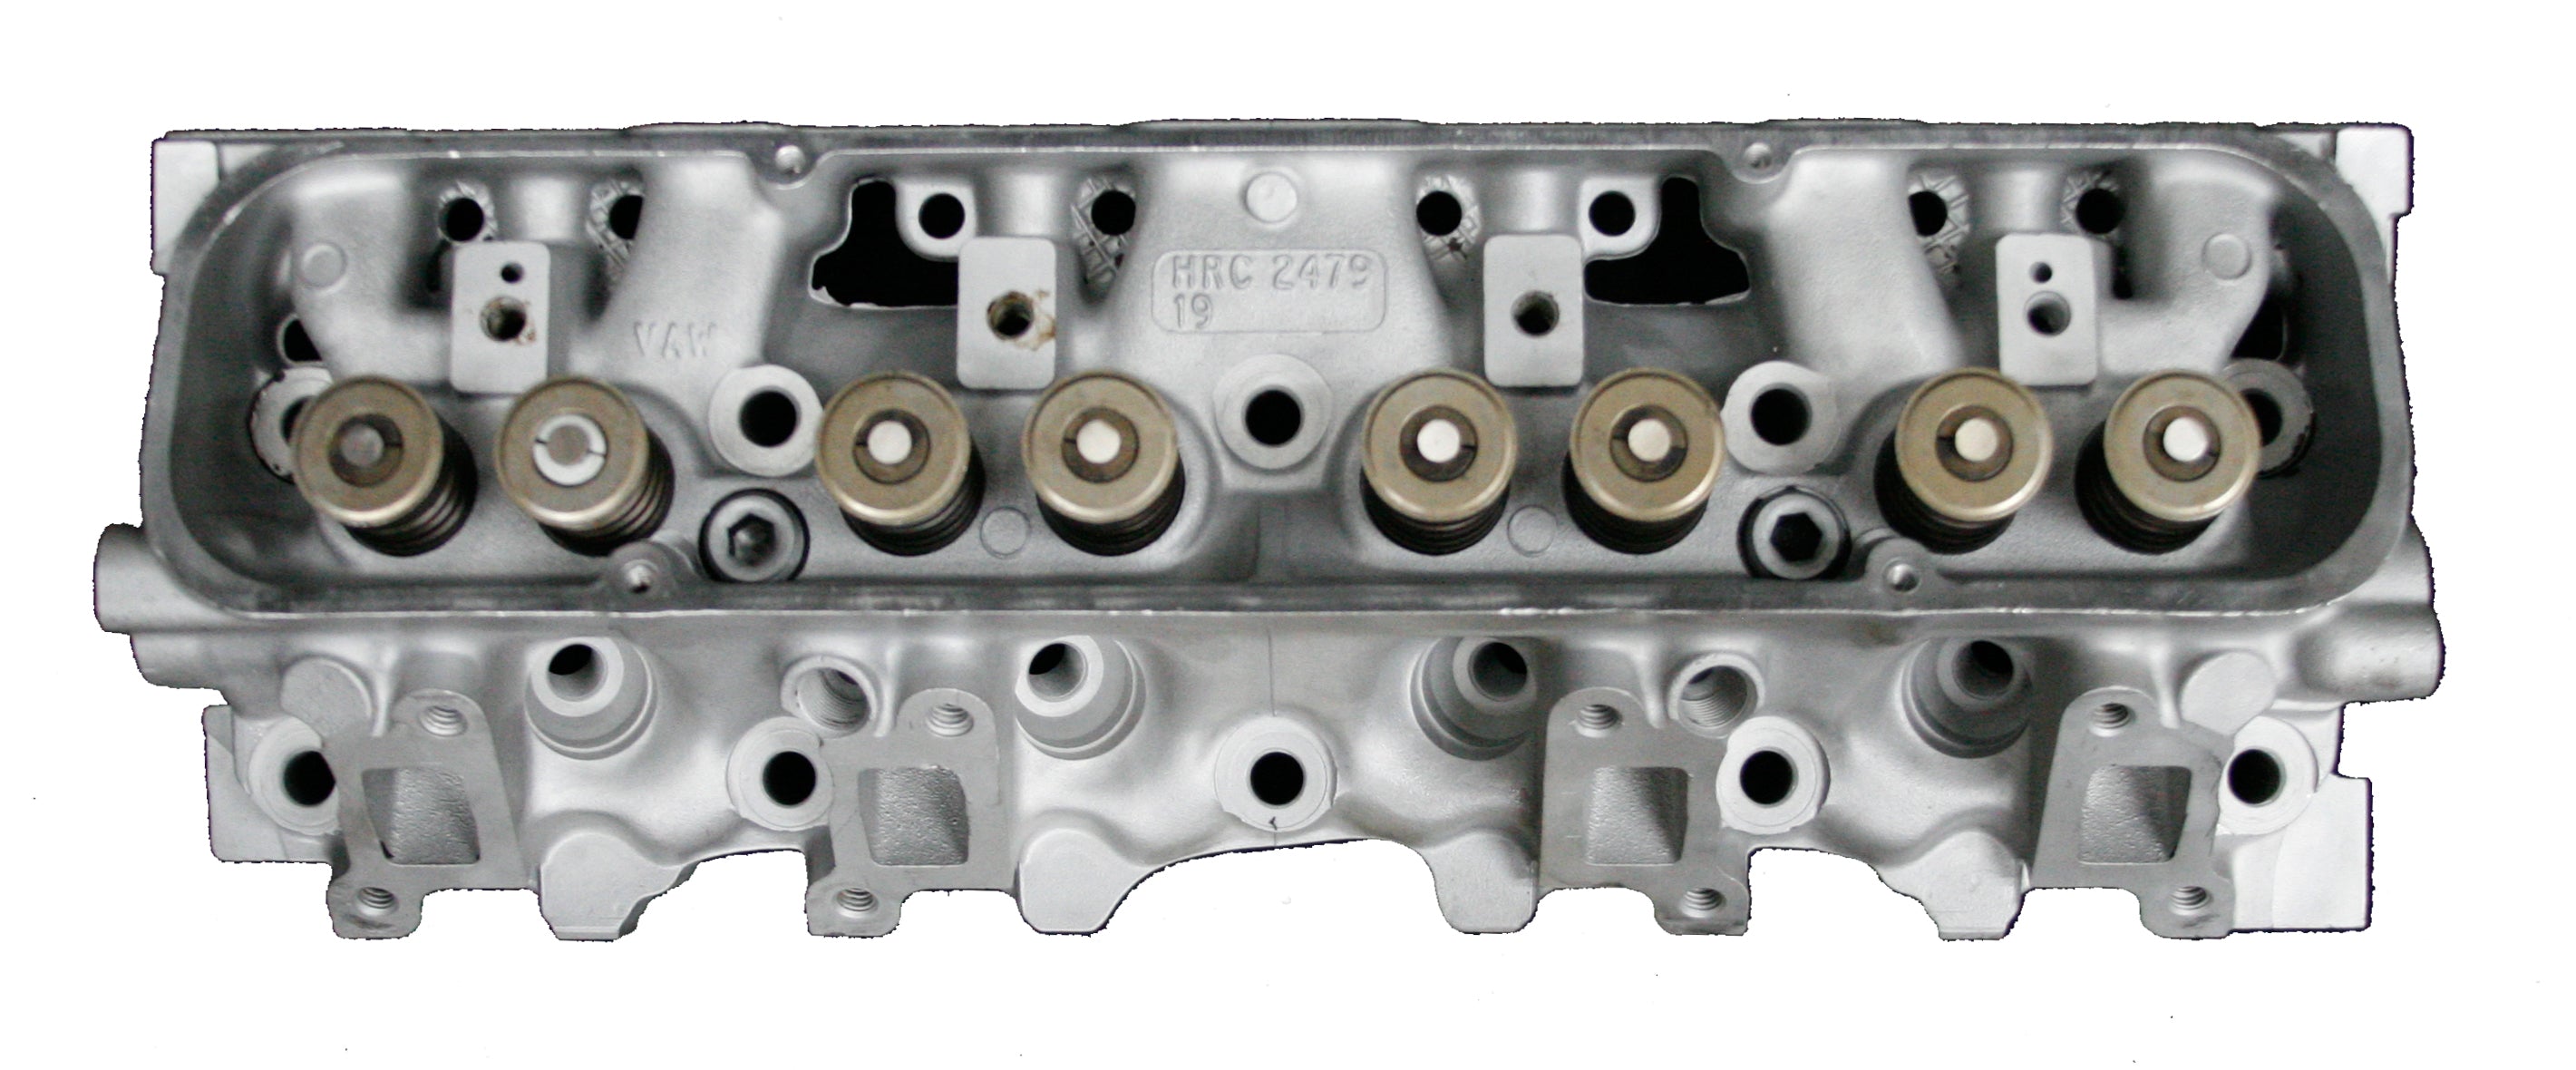 1995-2010 Land Rover 4.0L or 4.6L V8 Cylinder Head Casting # HRC2479 Both heads No Smog